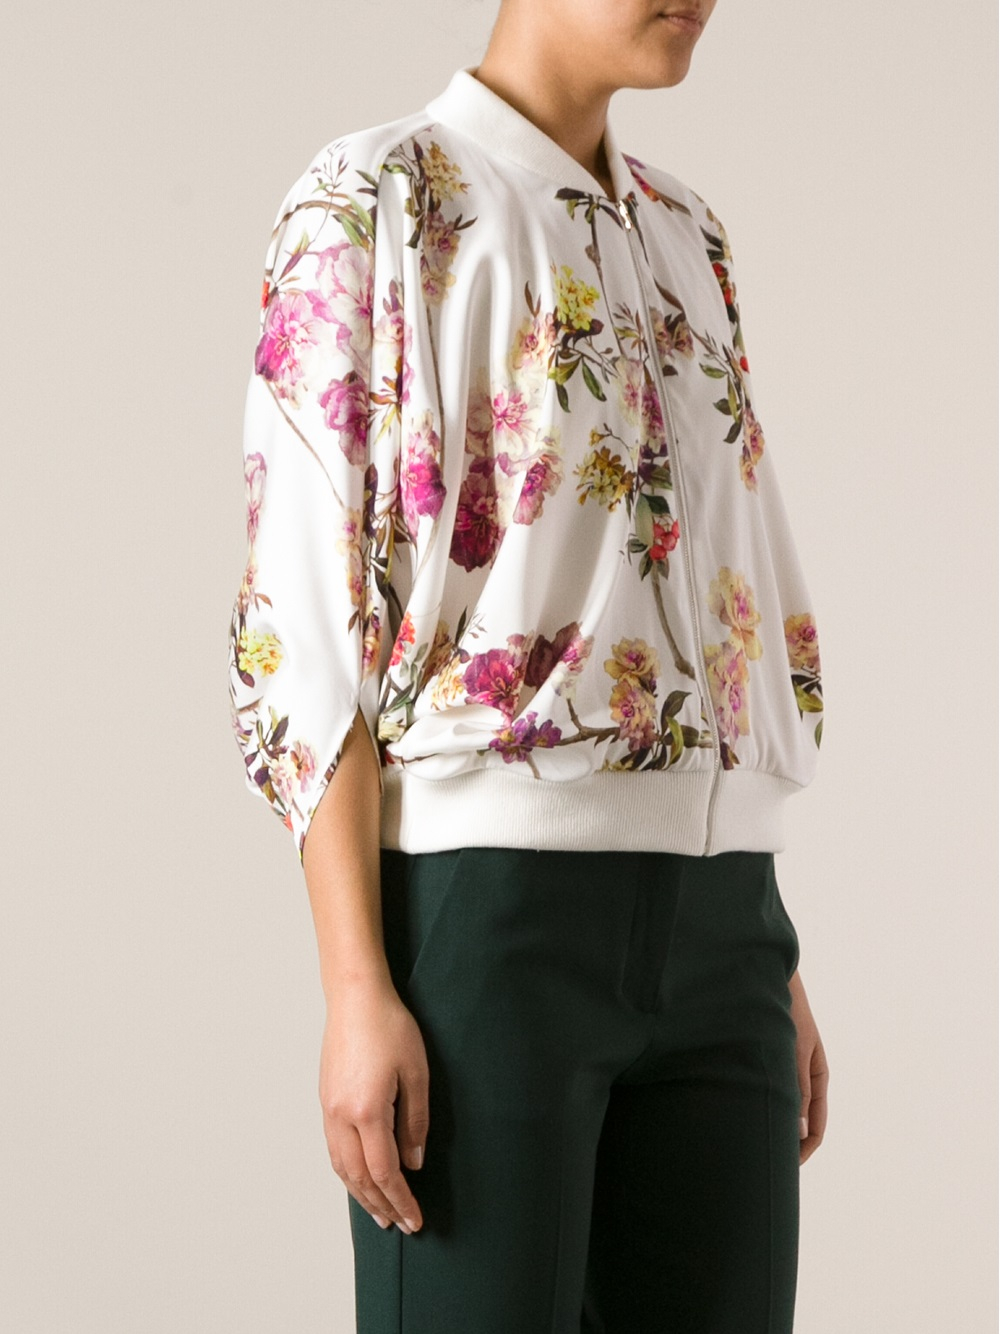 Lyst - Giambattista Valli Floral Print Jacket in White